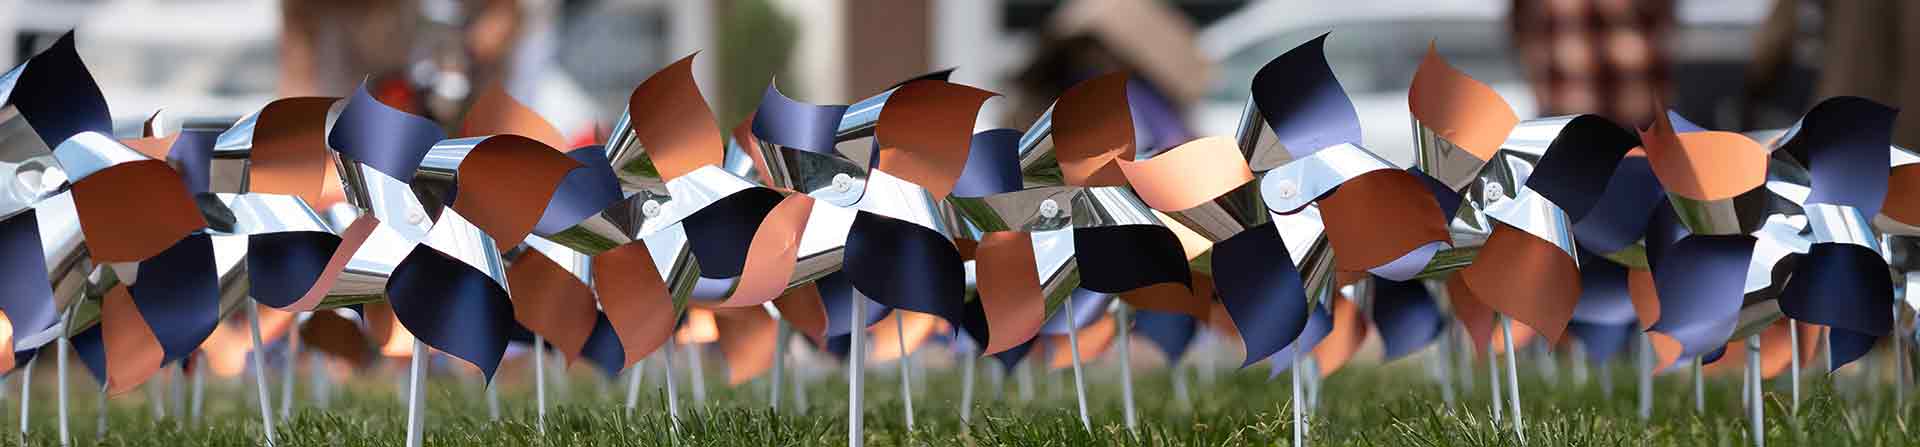 Orange and blue pinwheels from the UVA Health Donate Life pinwheel garden.